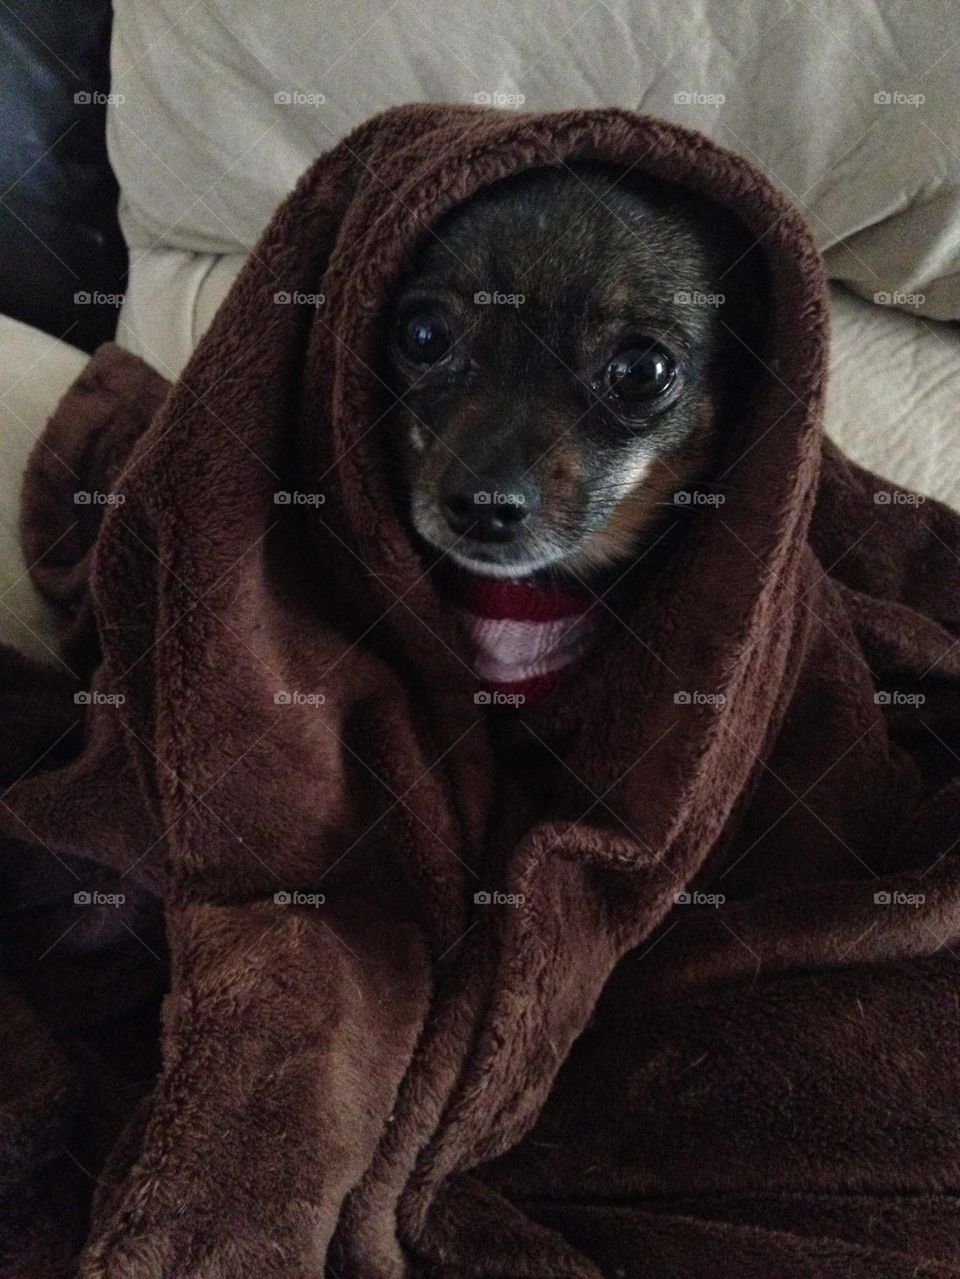 Jedi puppy 